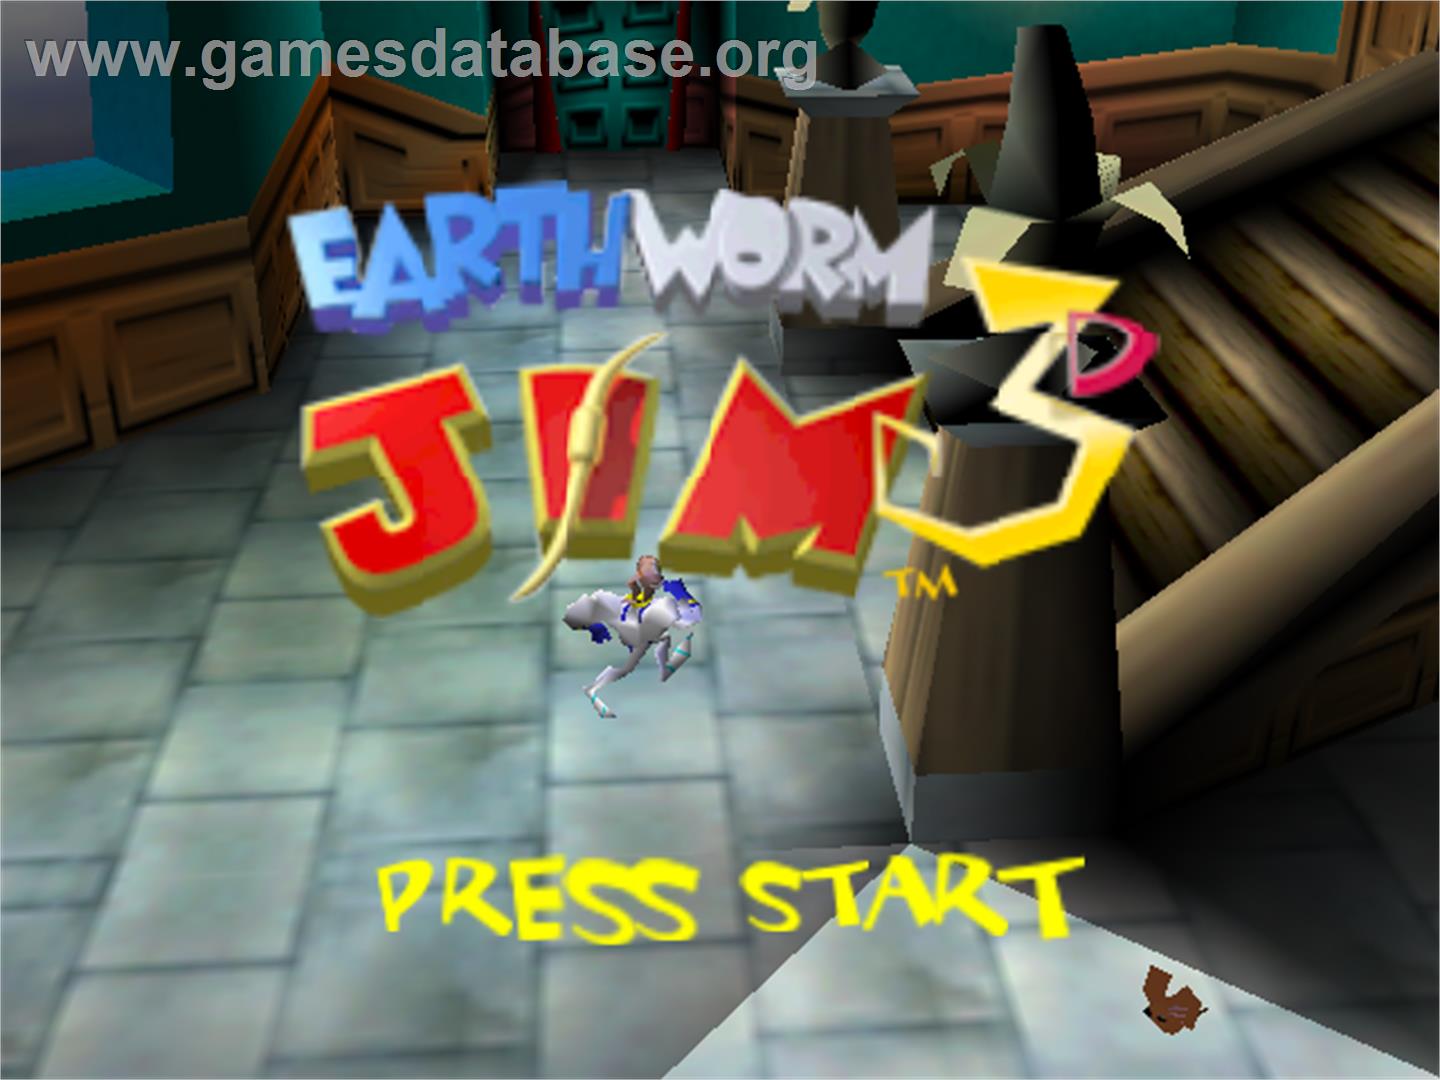 Earthworm Jim 3D - Nintendo N64 - Artwork - Title Screen